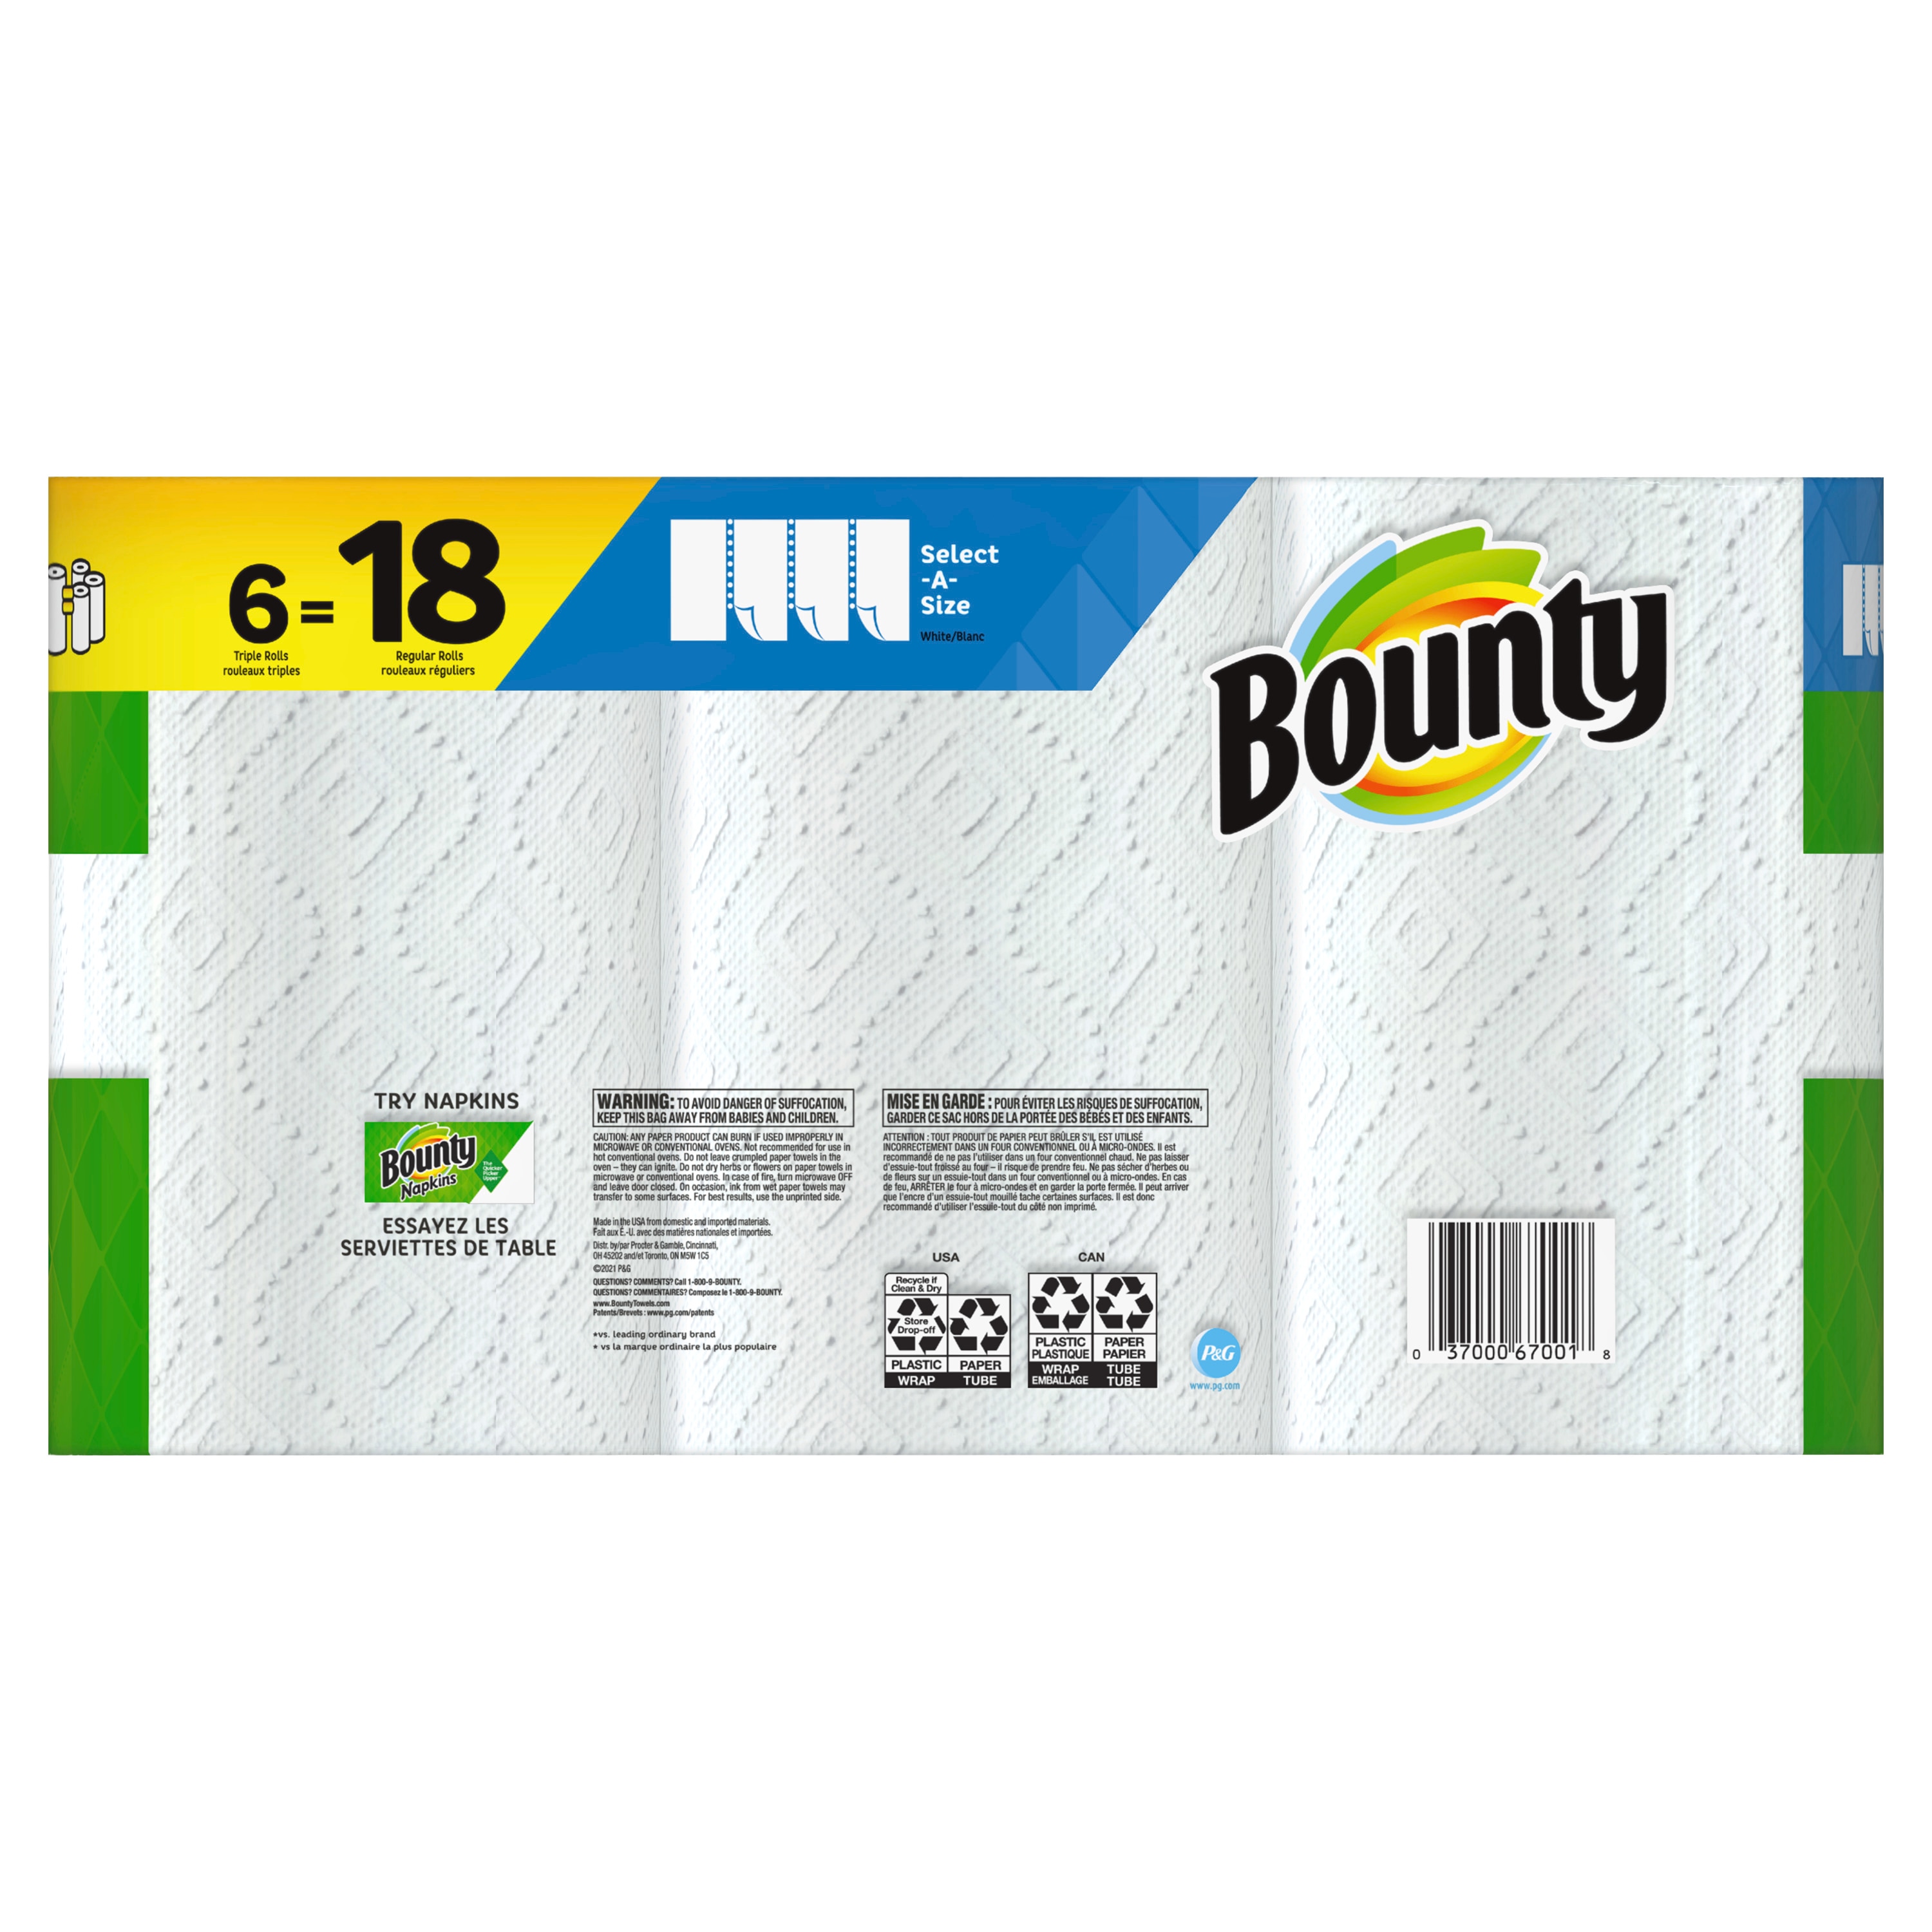 Bounty Select-A-Size Paper Towels, six triple rolls - Ralphs